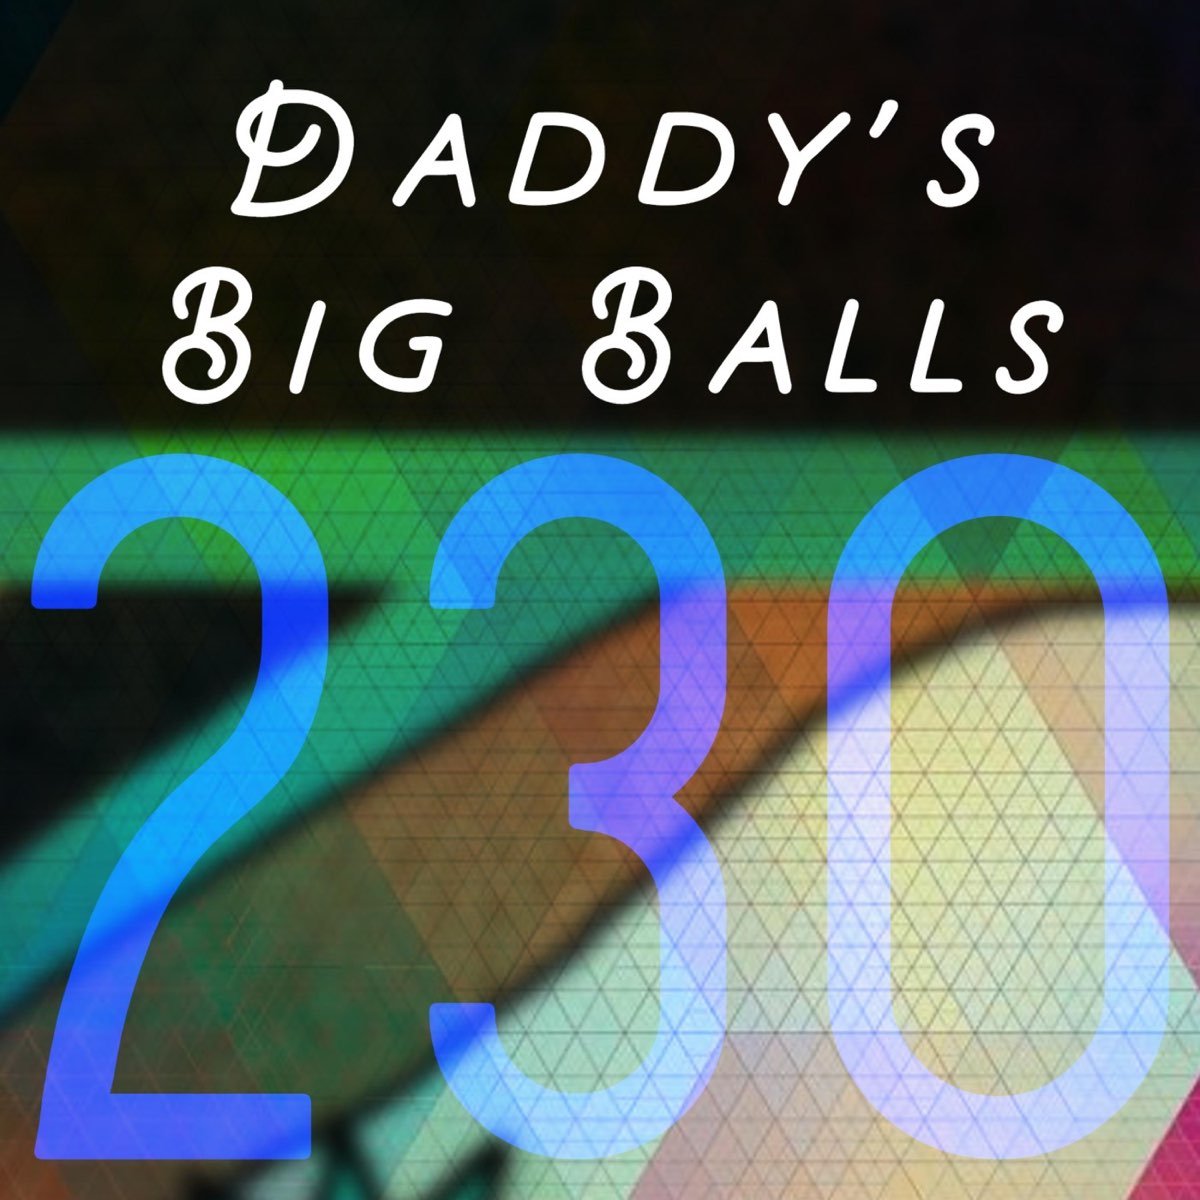 Daddys big balls